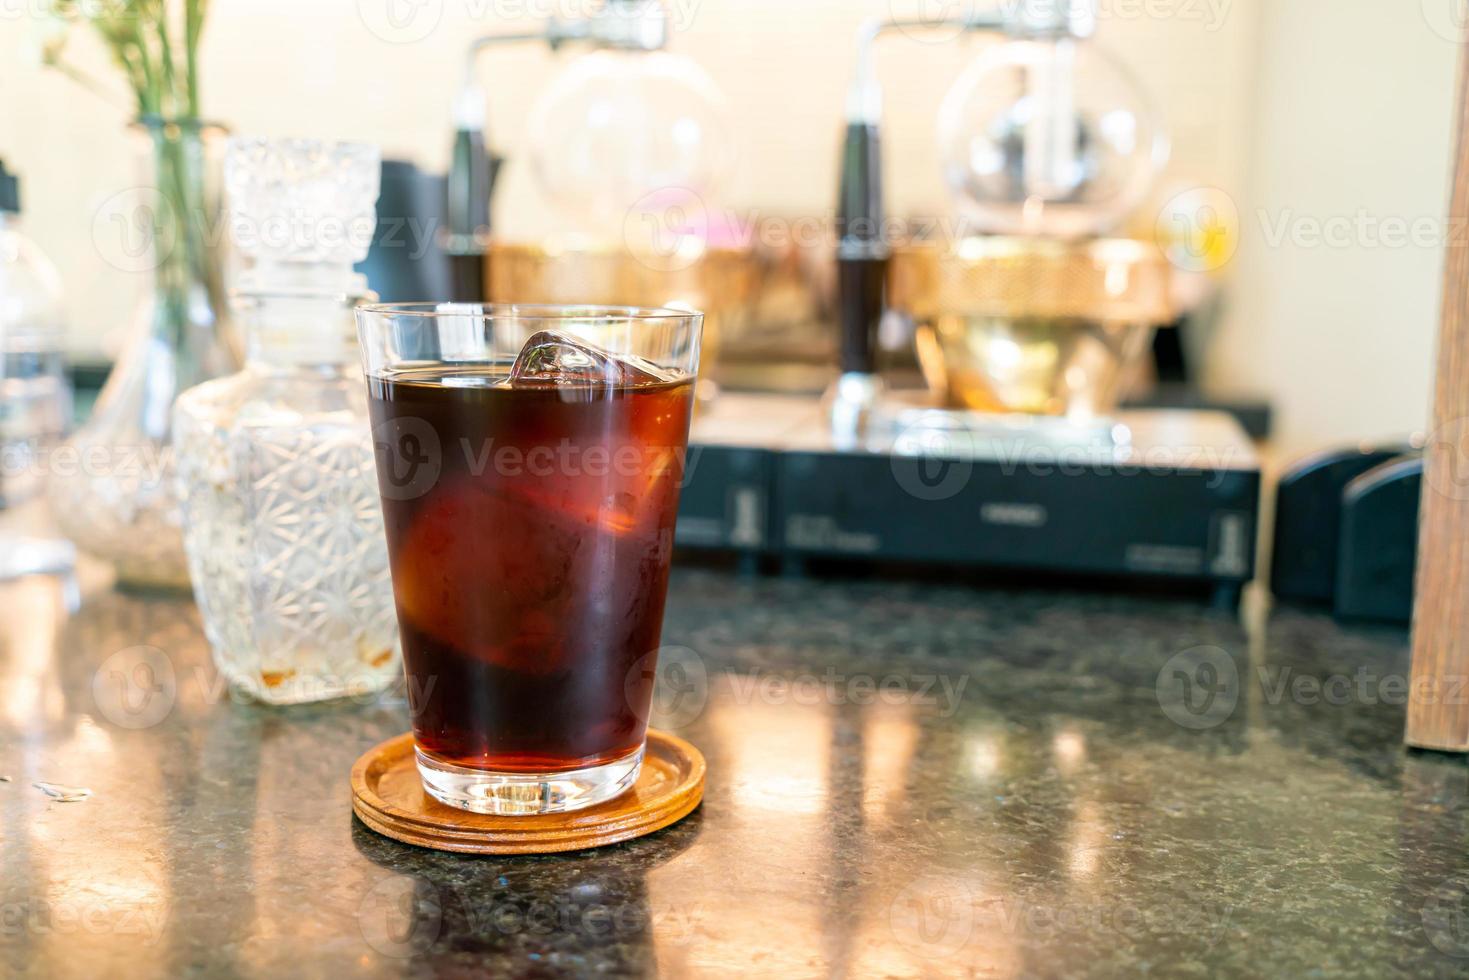 cold brew koffie of americano zwarte koffie in glas met ijsblokje in coffeeshop café en restaurant foto